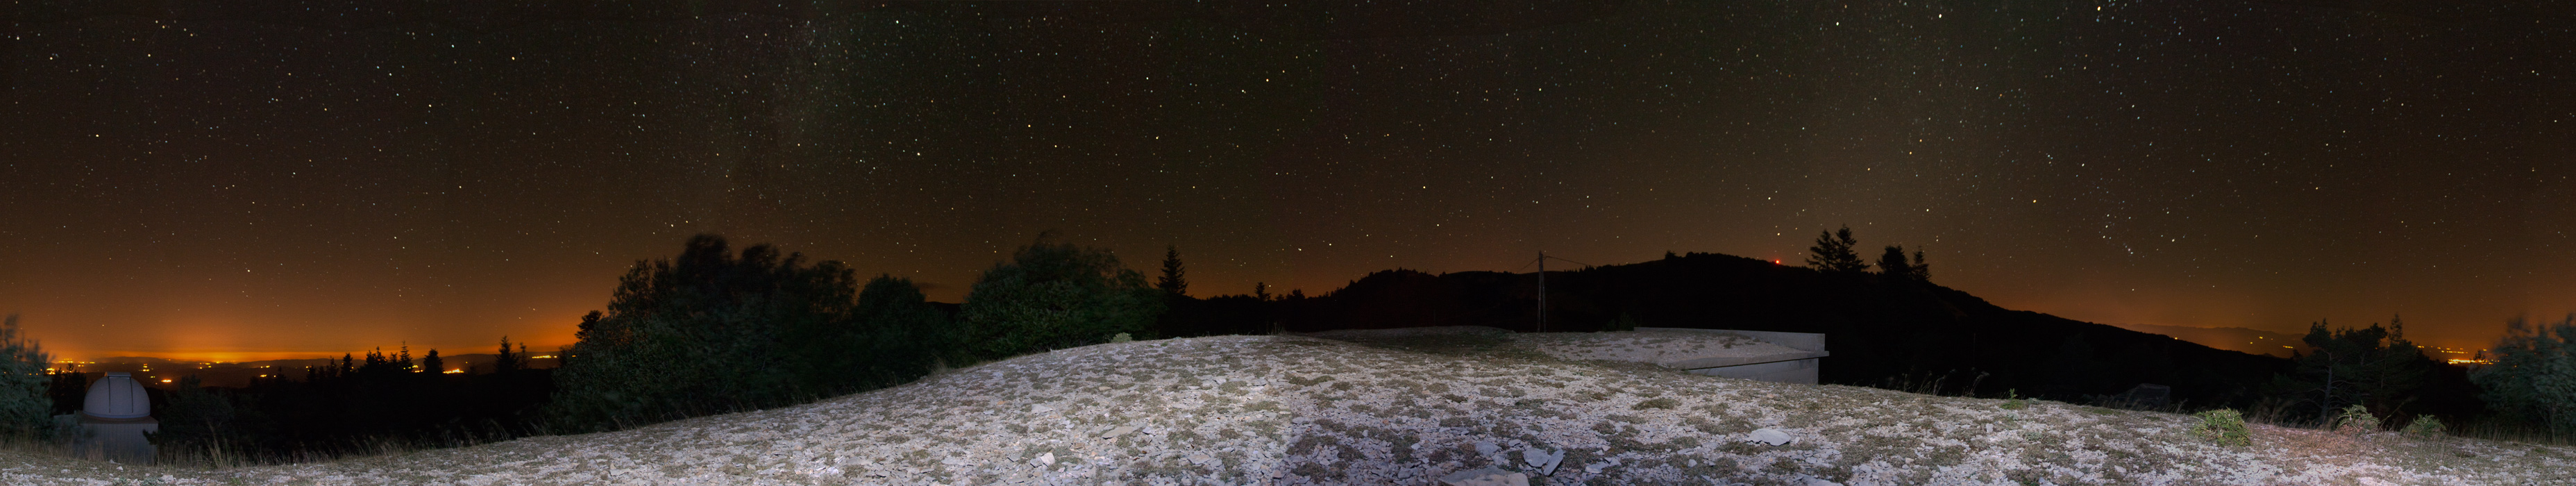 360-spot-avex--montagne-de-lure--gresac--starry-night.jpg